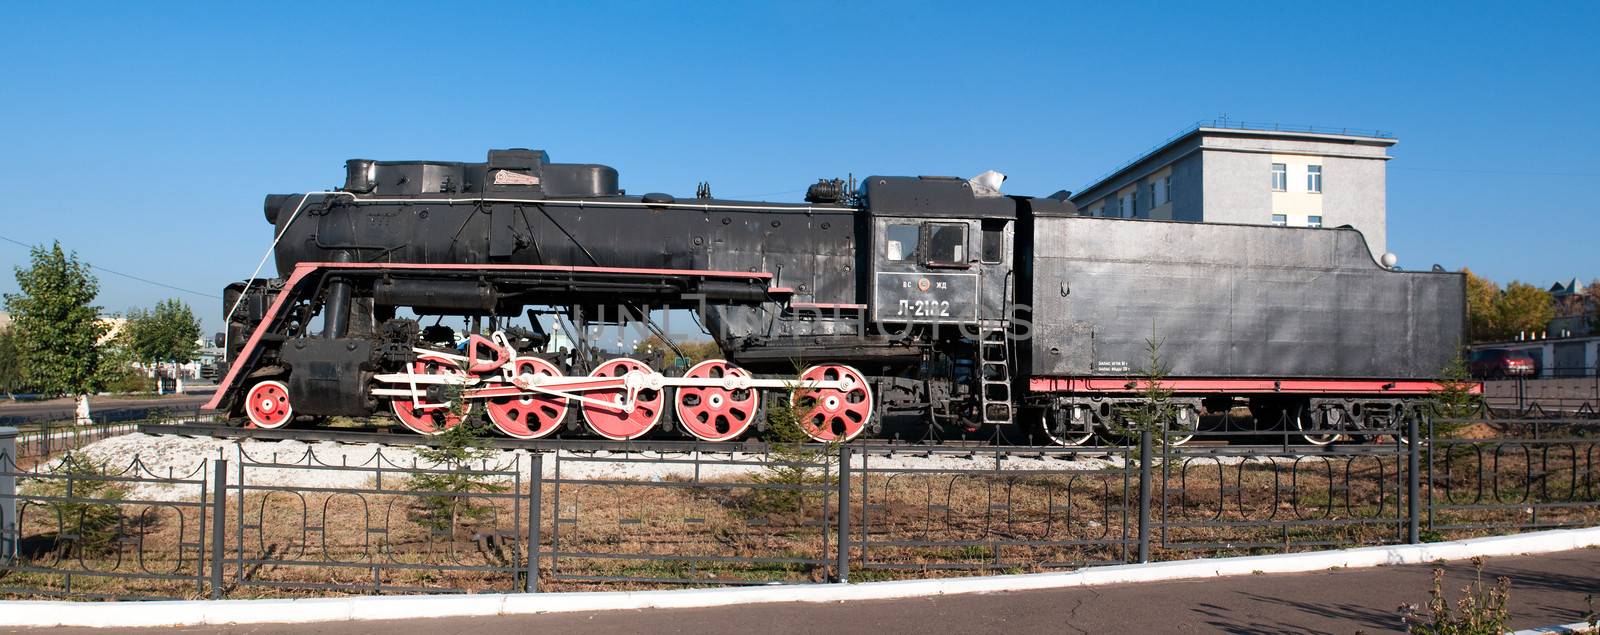 Monument of old steam locomotive. Ulan-Ude, capital city of the Buryat Republic, Russia